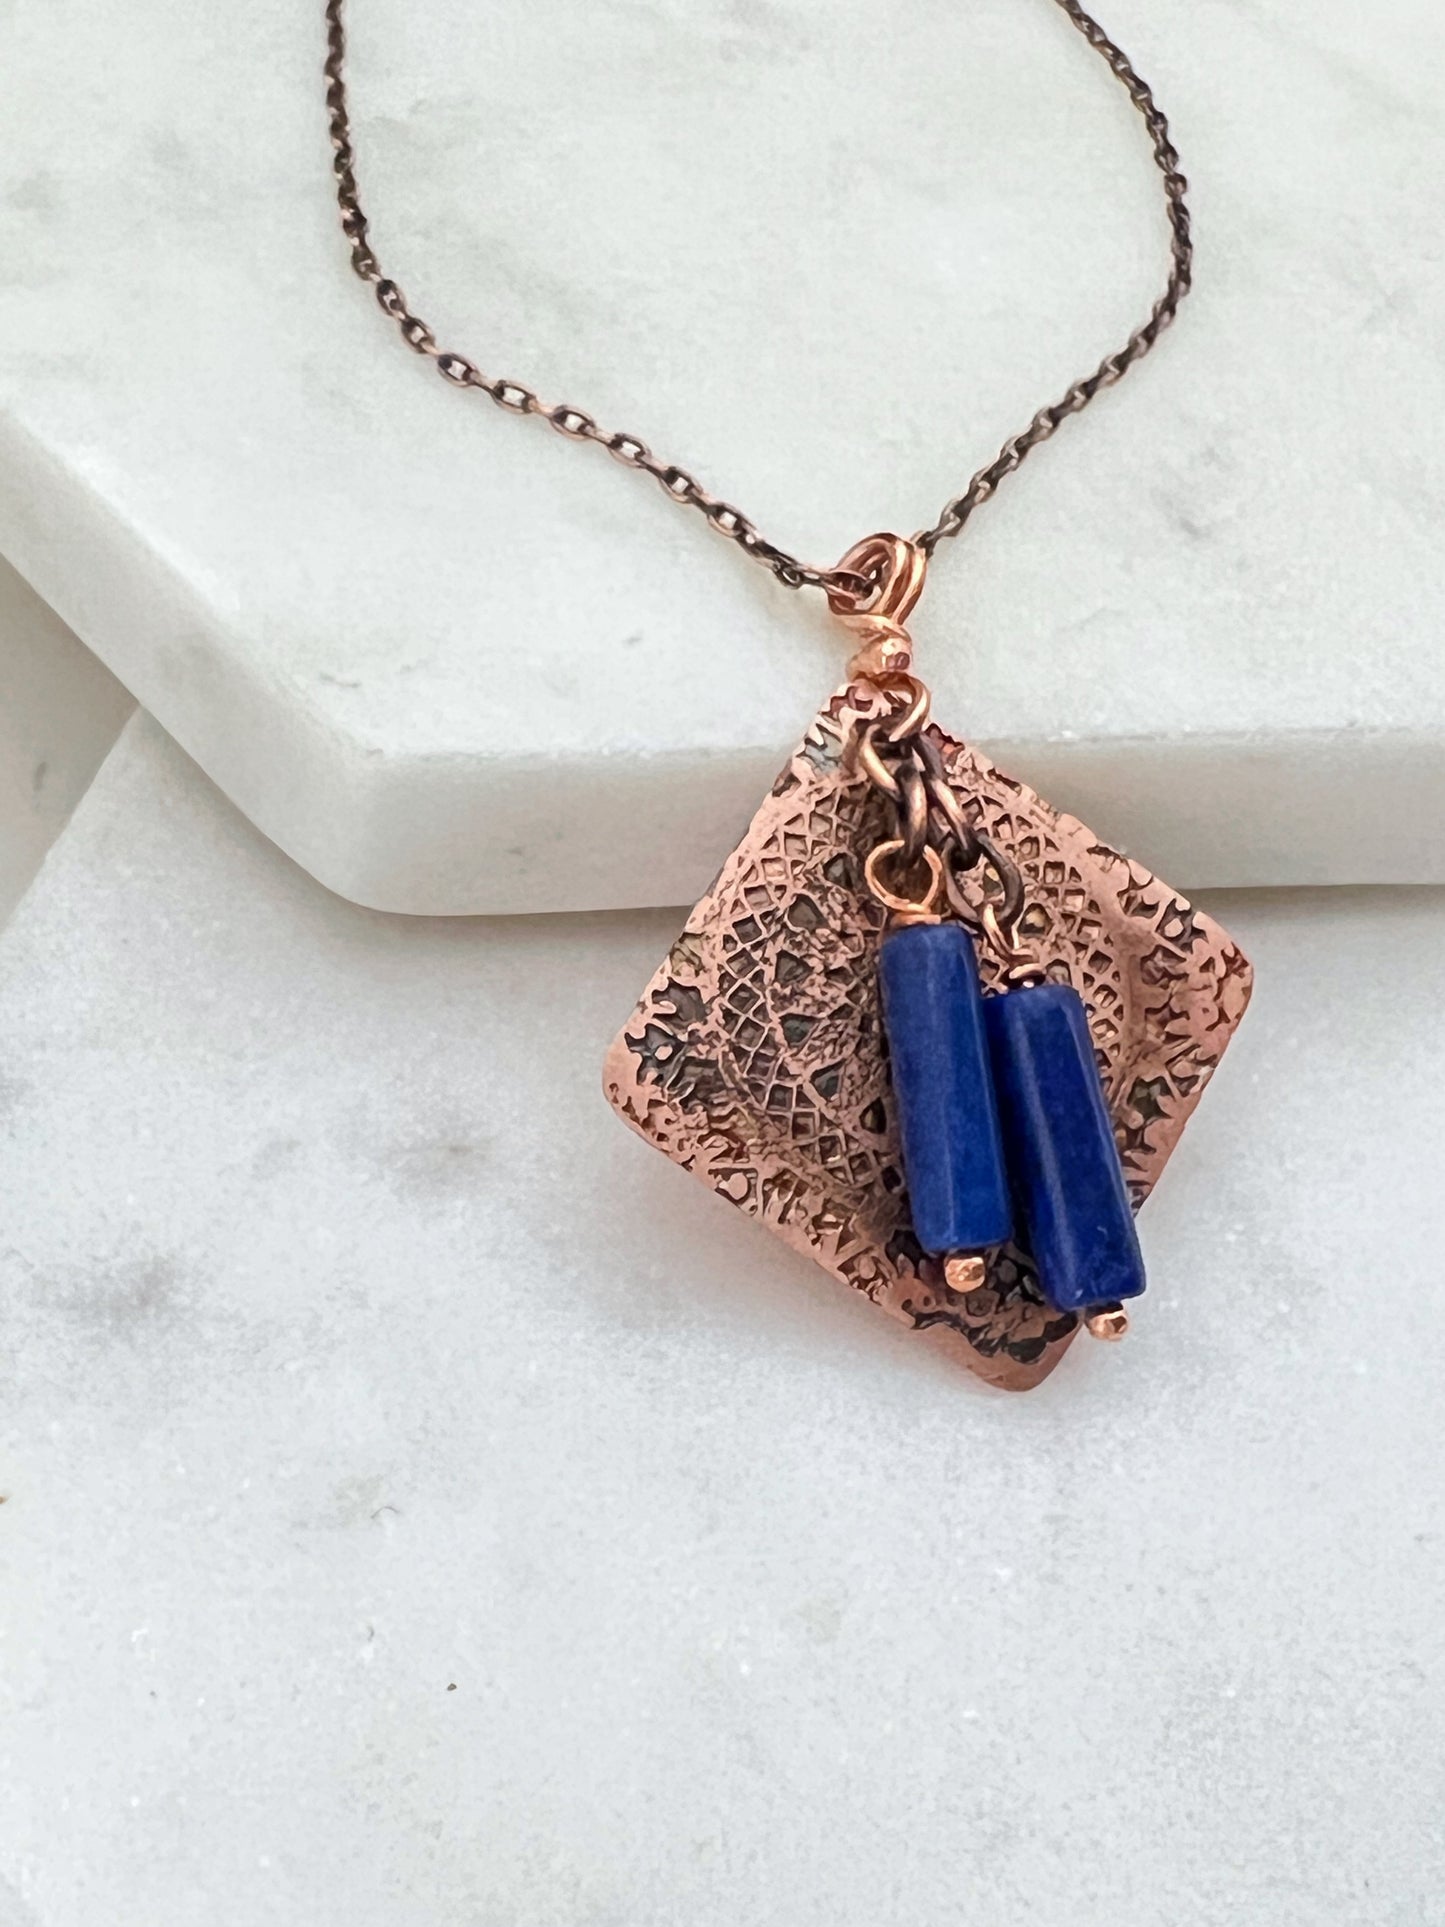 Acid etched copper necklace with lapis gemstones